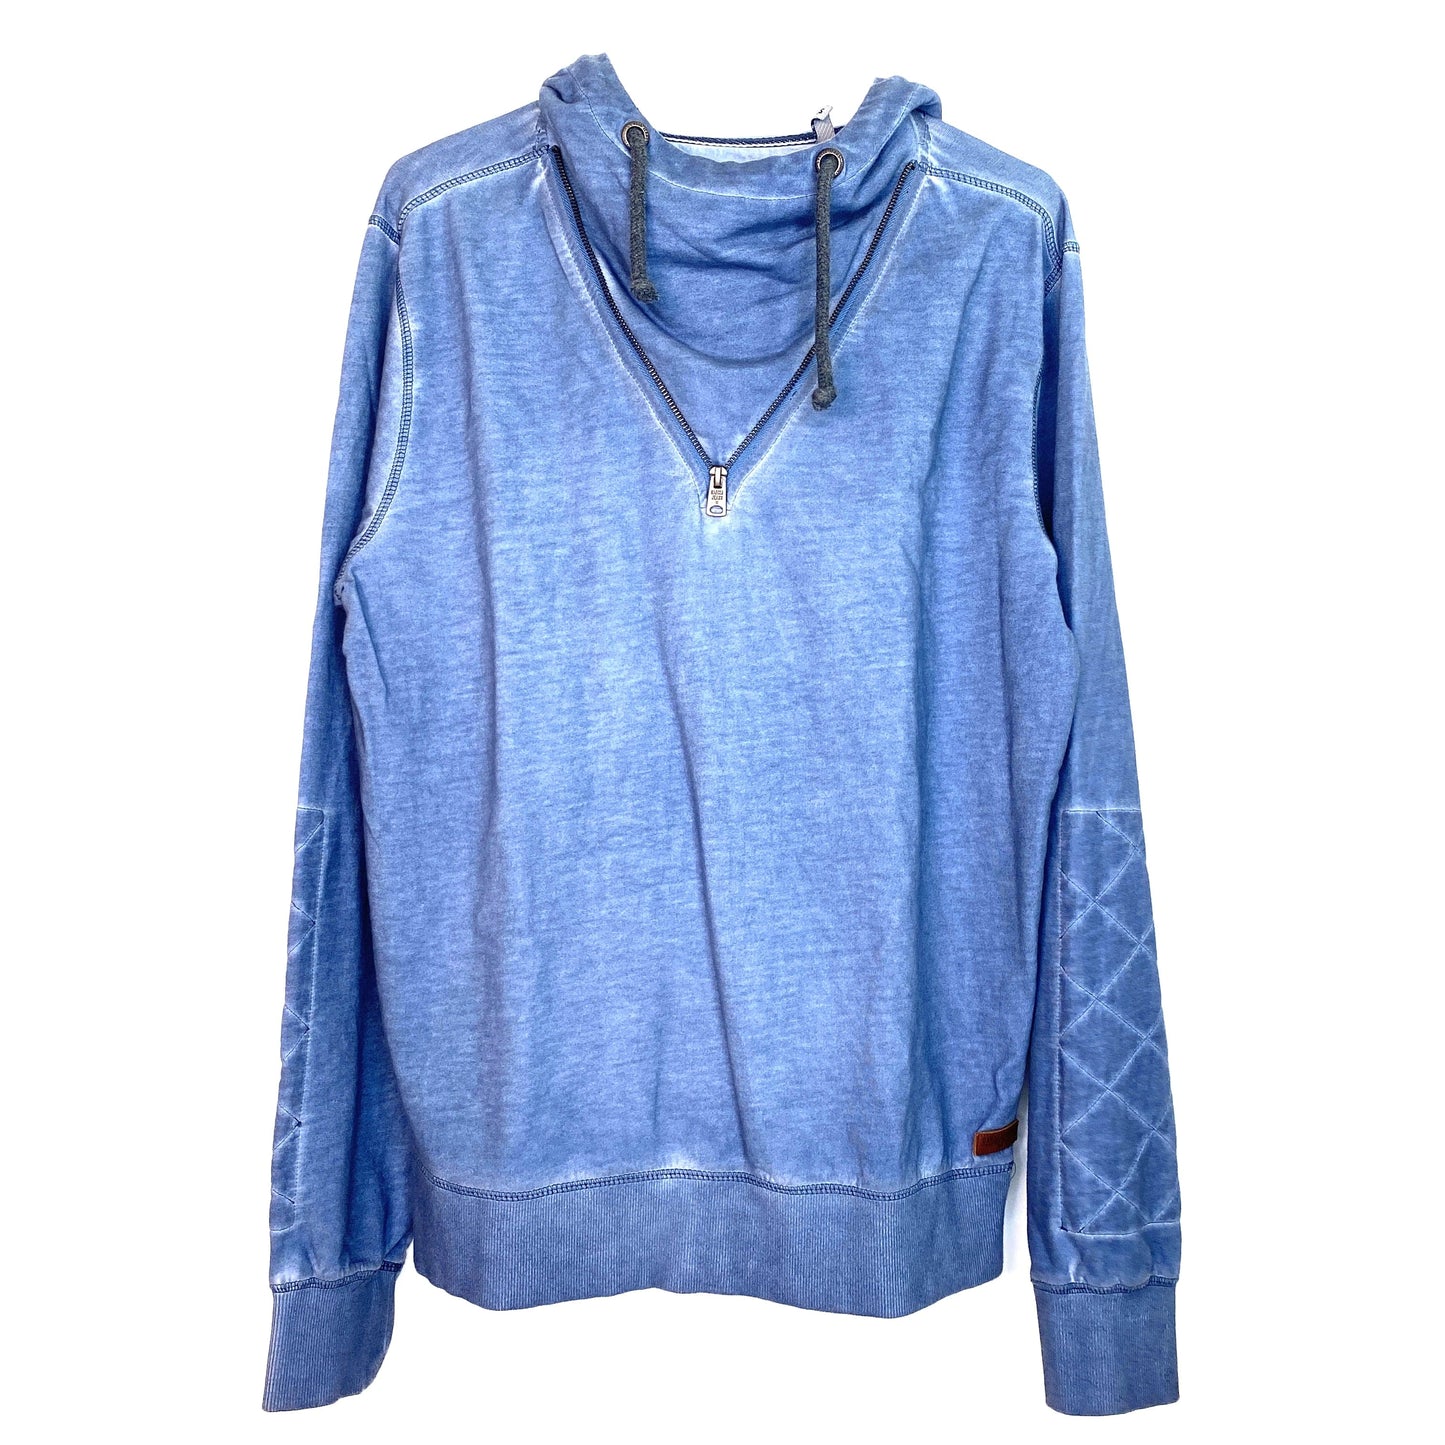 Stylish Garcia Jeans Men's XL Blue Acid Washed Hoodie Sweatshirt